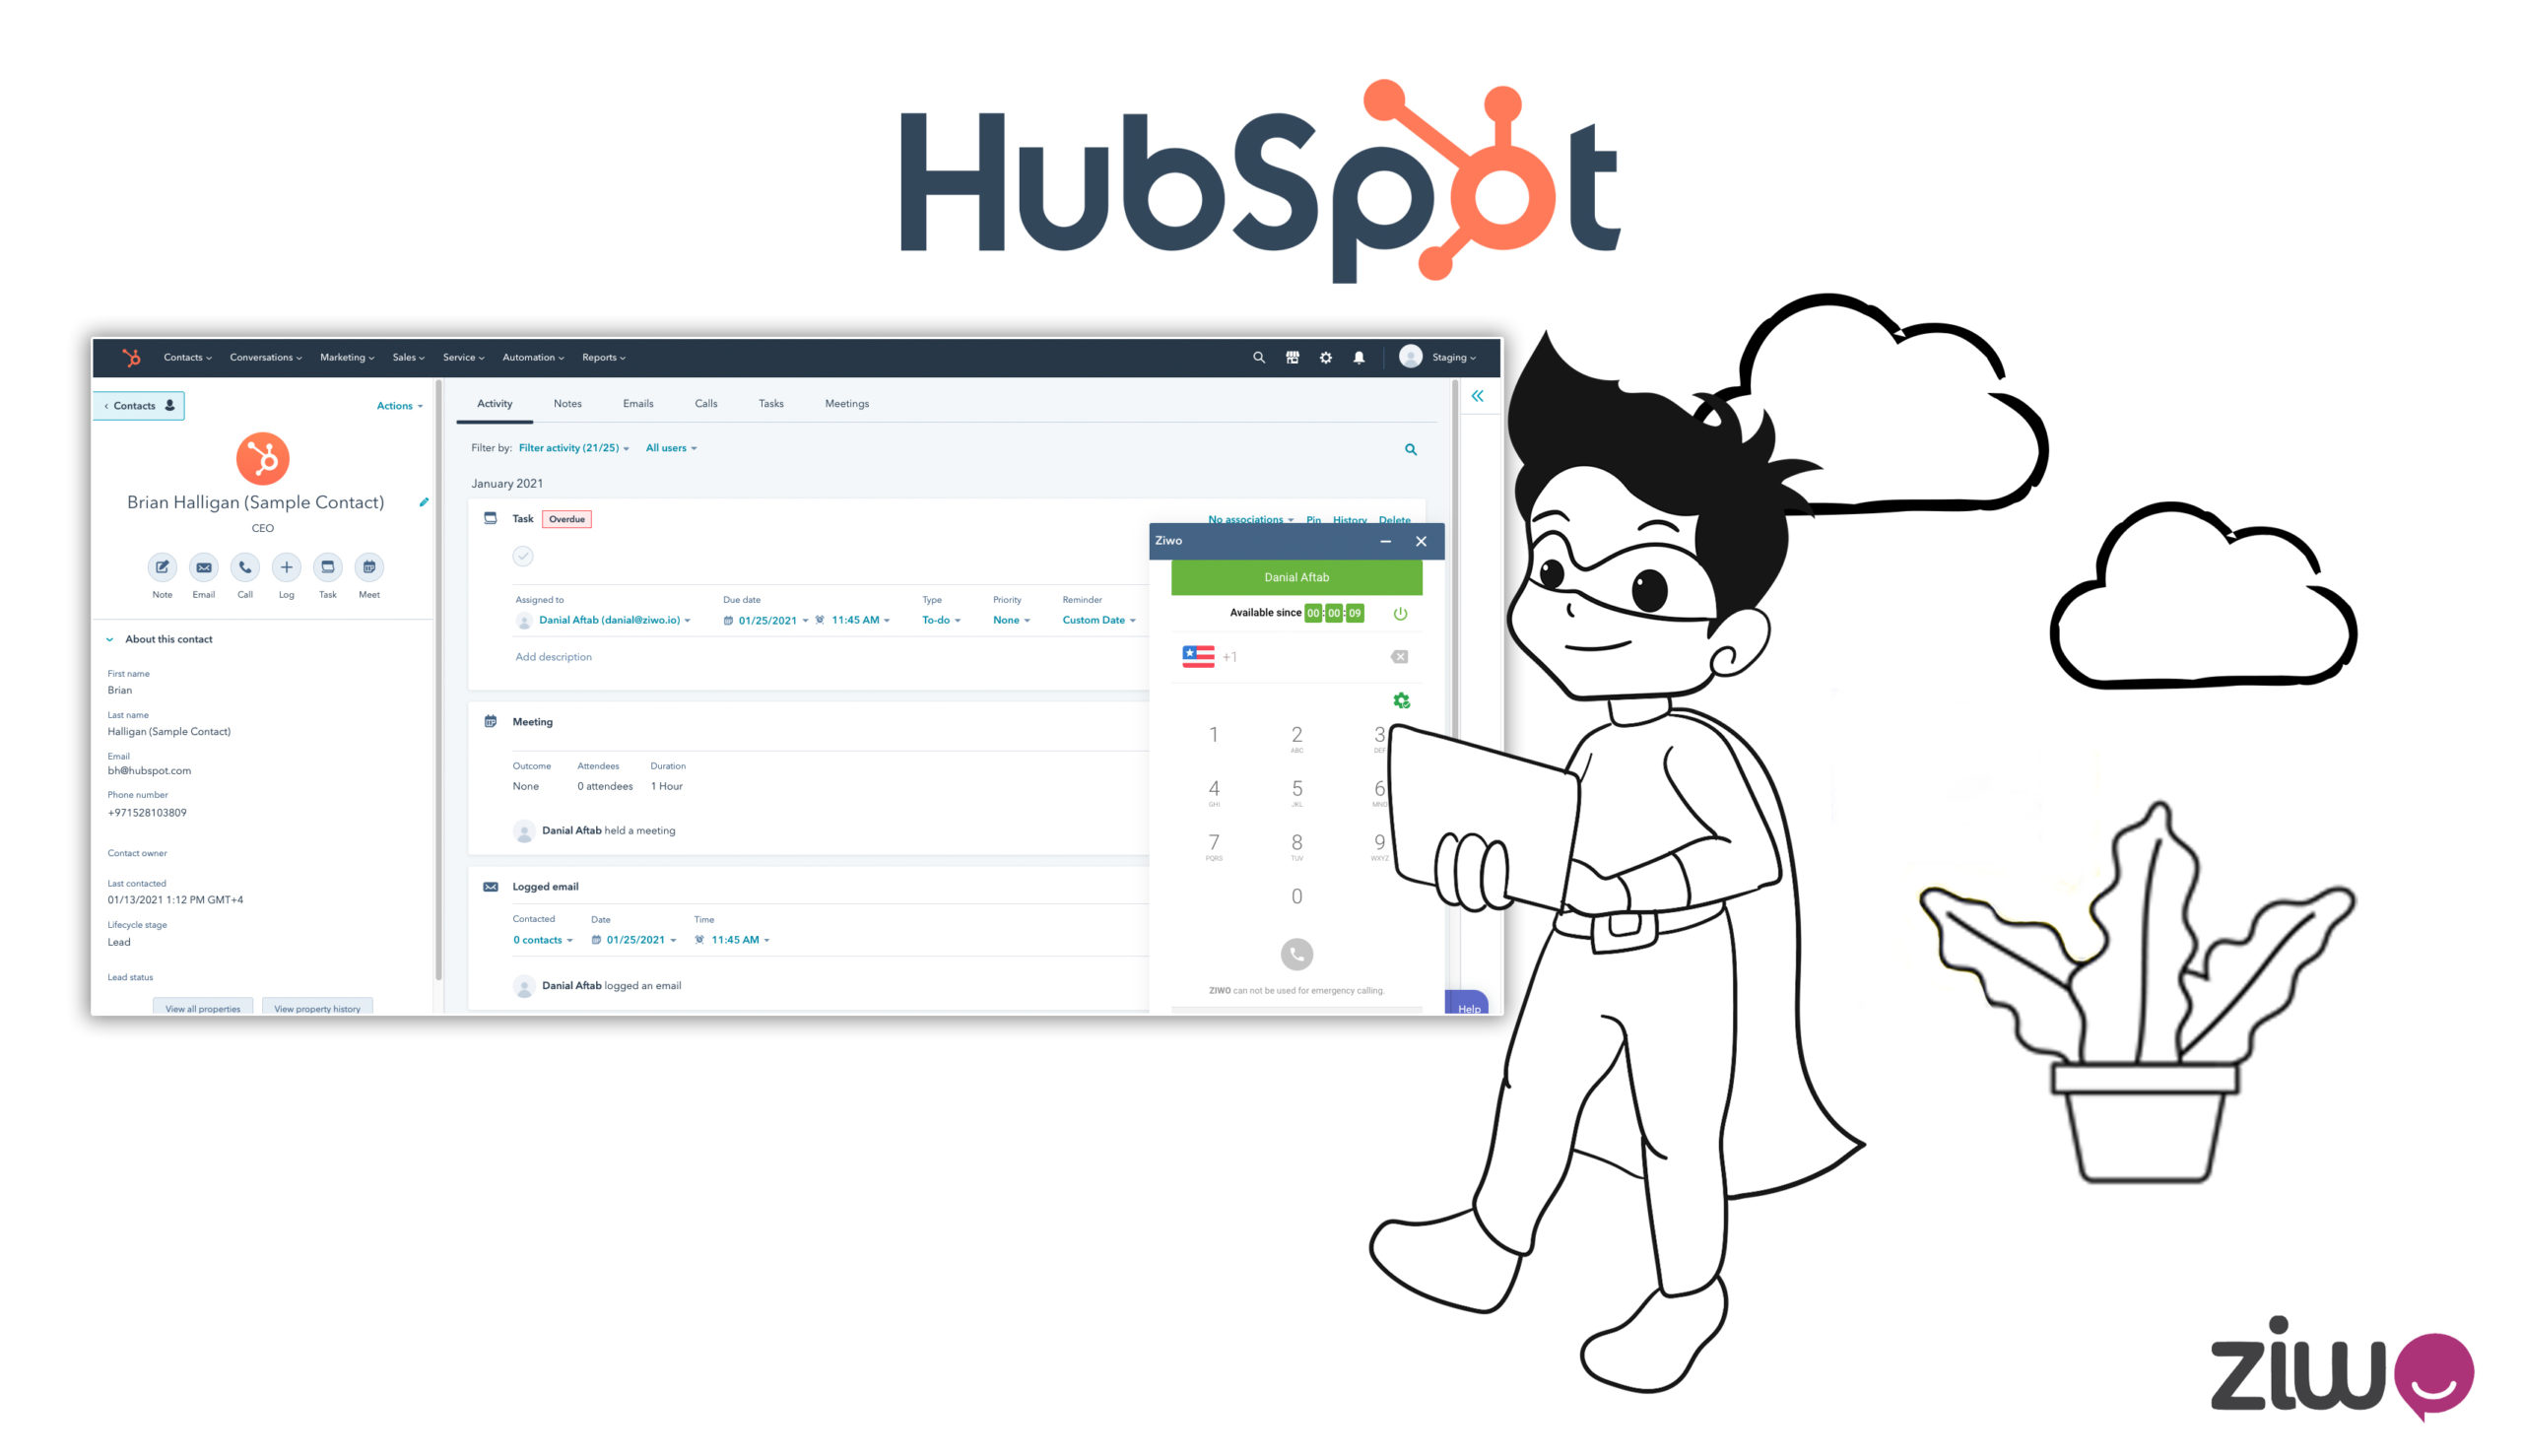 HubSpot's new features